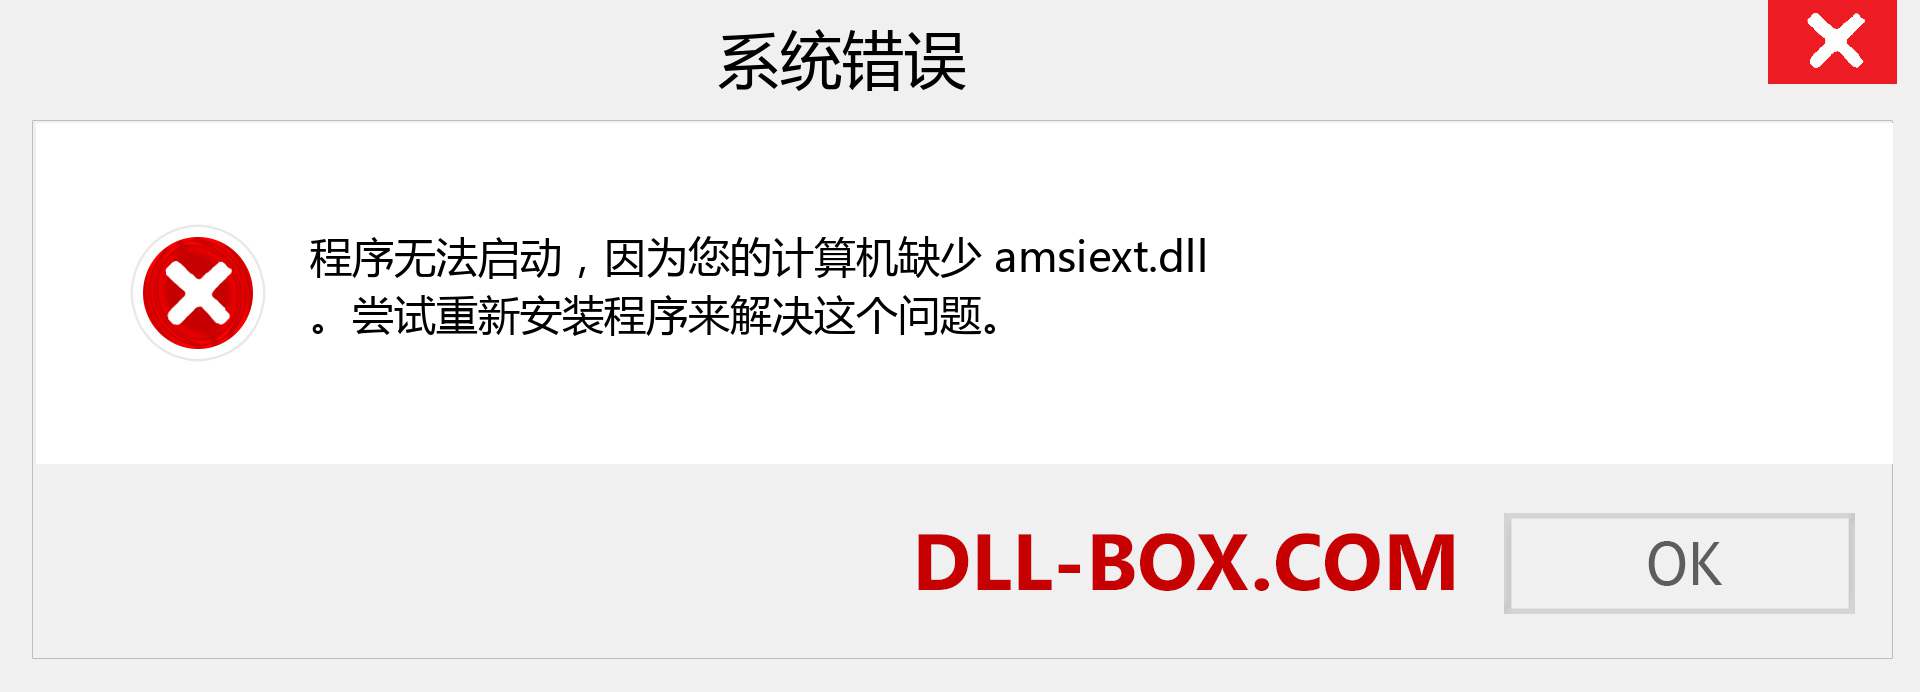 amsiext.dll 文件丢失？。 适用于 Windows 7、8、10 的下载 - 修复 Windows、照片、图像上的 amsiext dll 丢失错误